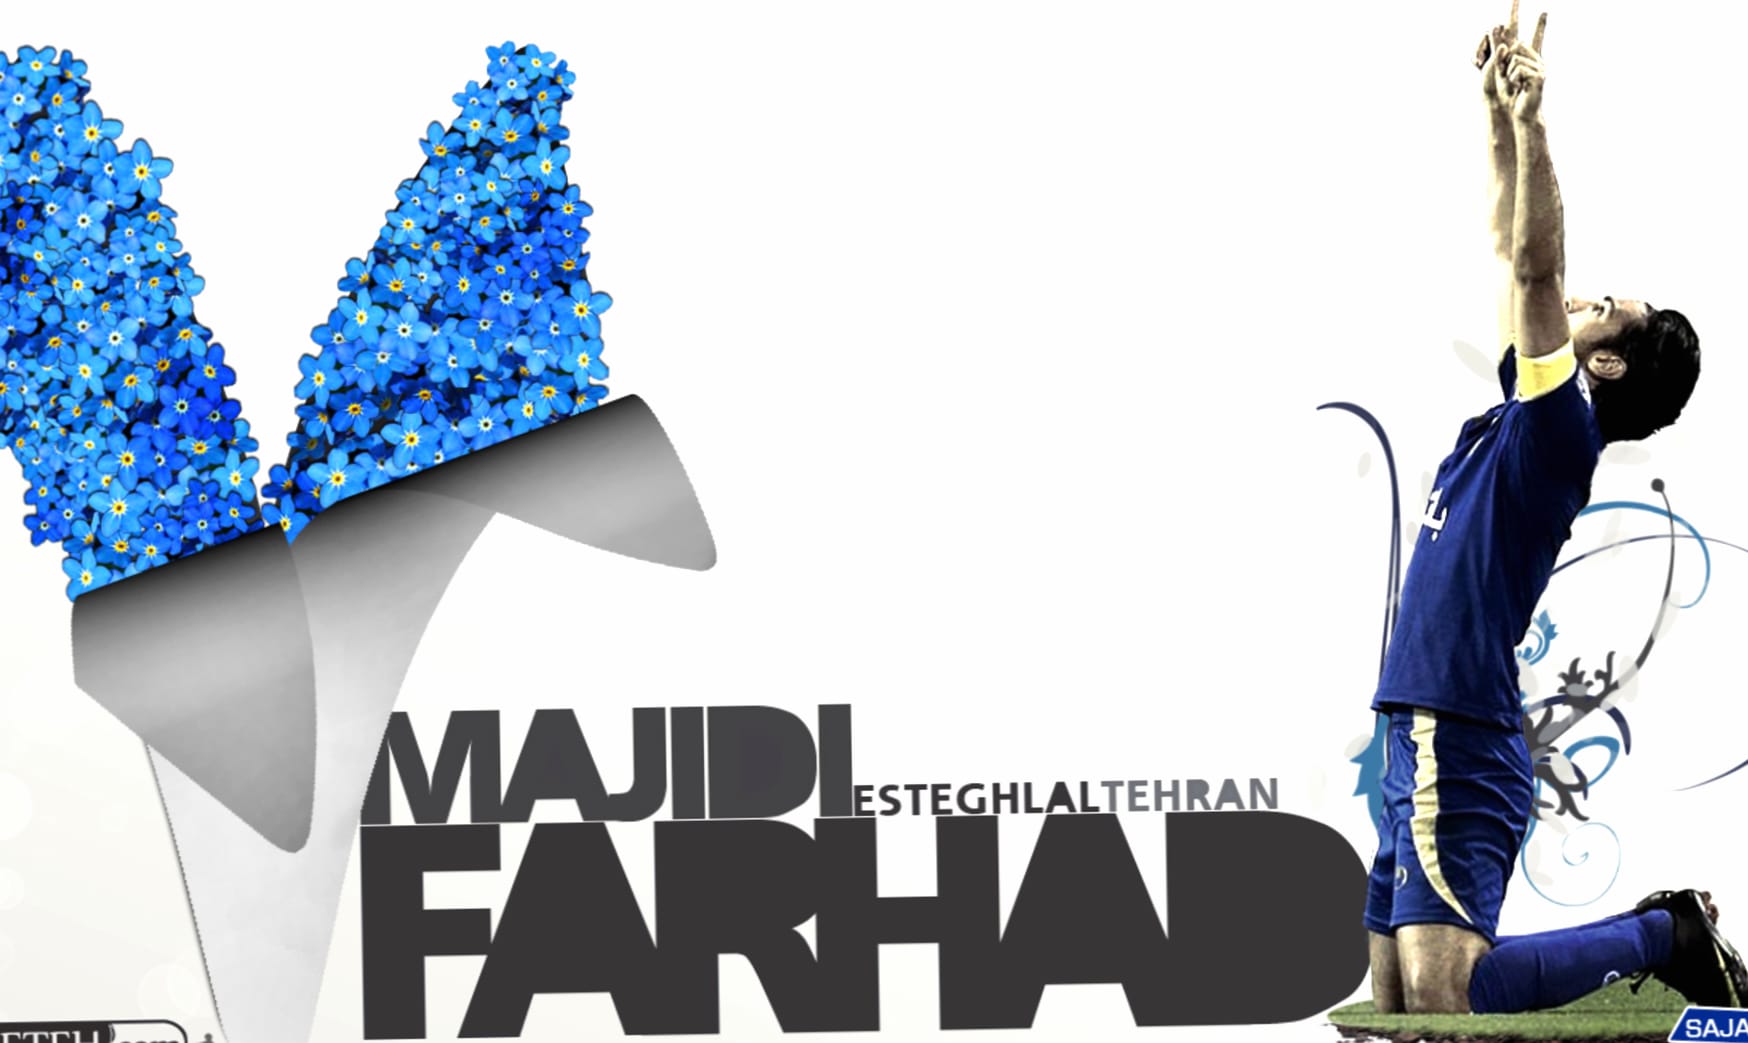 Farhad Majidi at 640 x 960 iPhone 4 size wallpapers HD quality